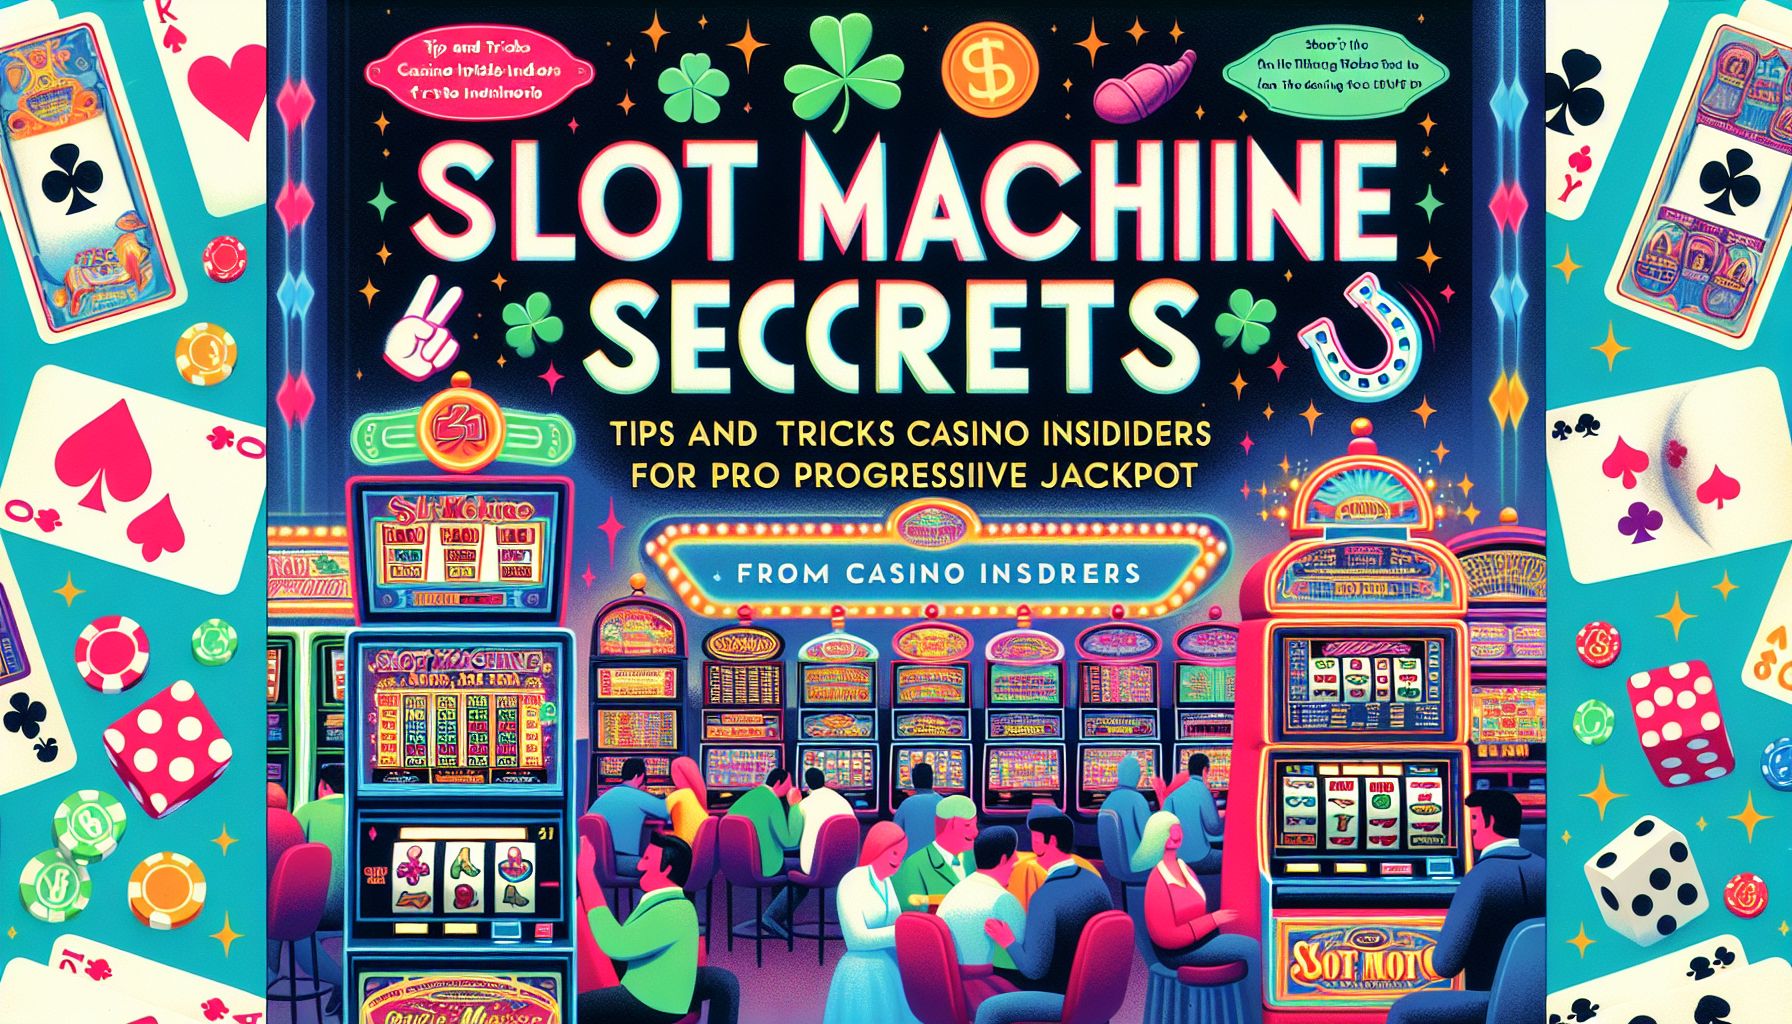 Slot Machine Secrets: Tips and Tricks from Casino Insiders for Progressive Jackpot